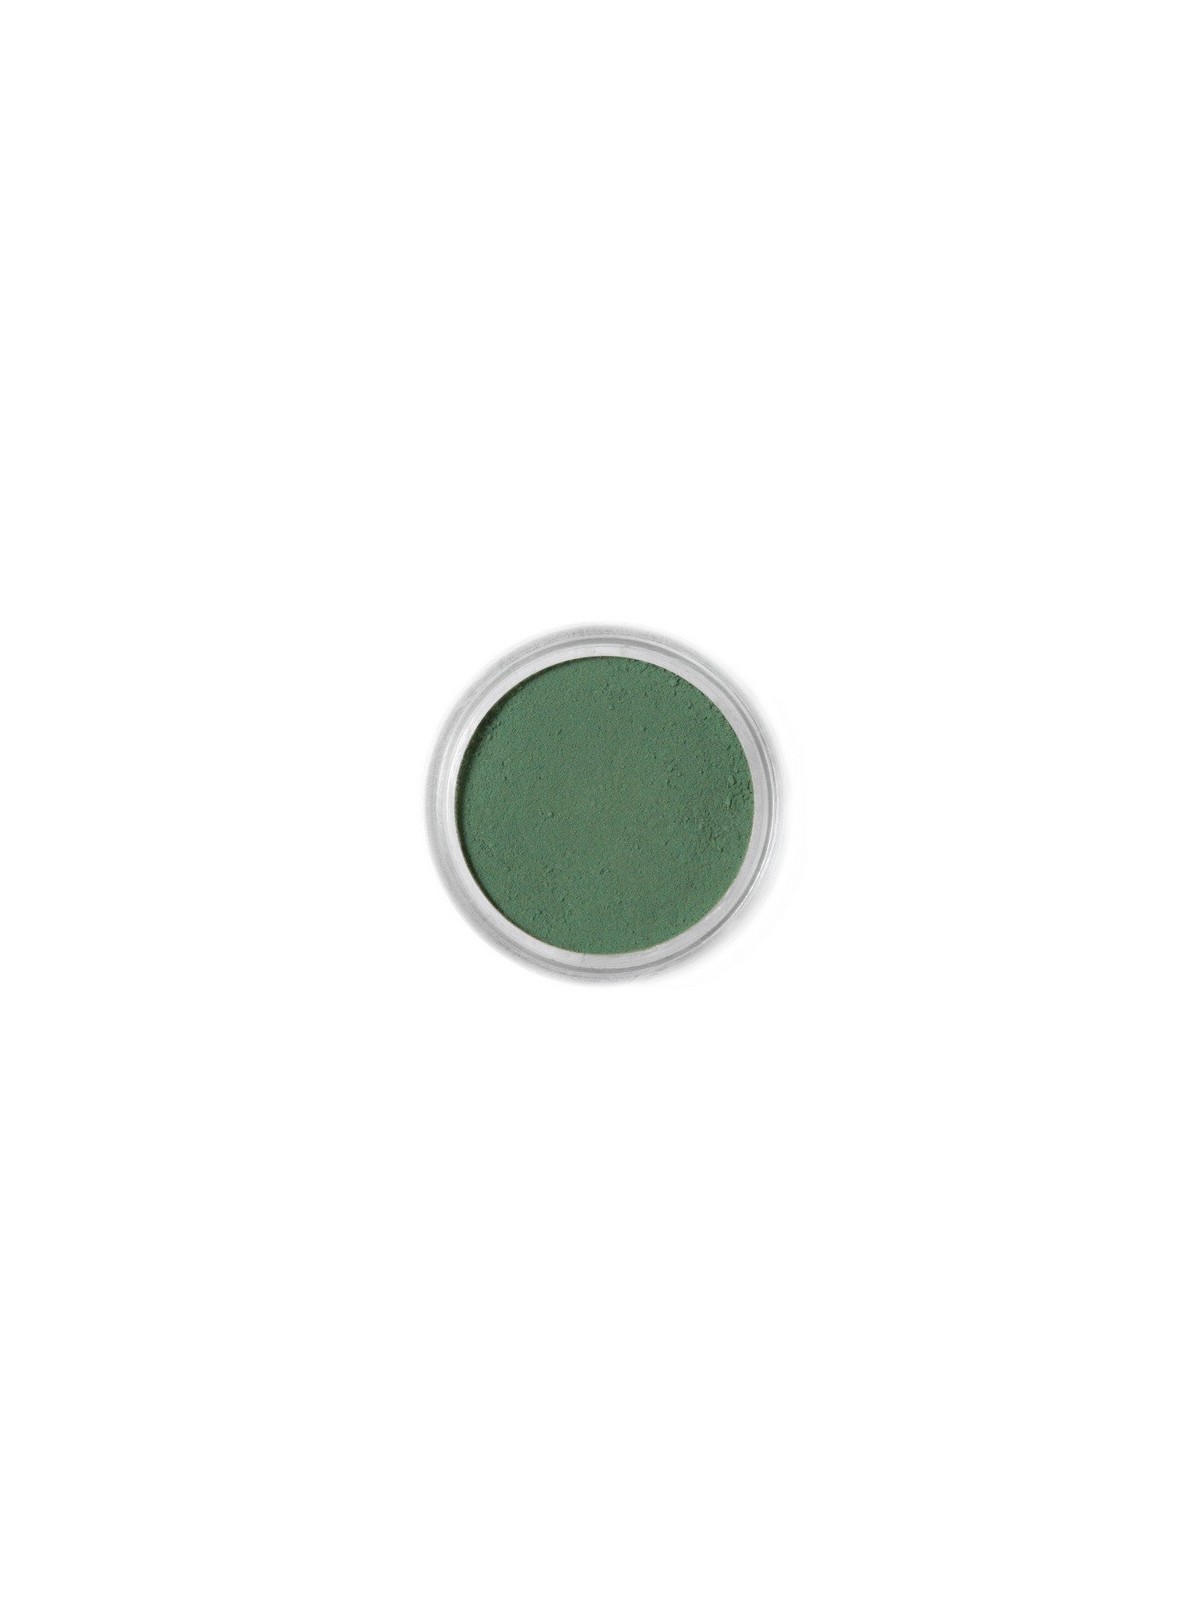 Jedlá prachová barva Fractal - Grass Green, Füzöld (1,5 g)